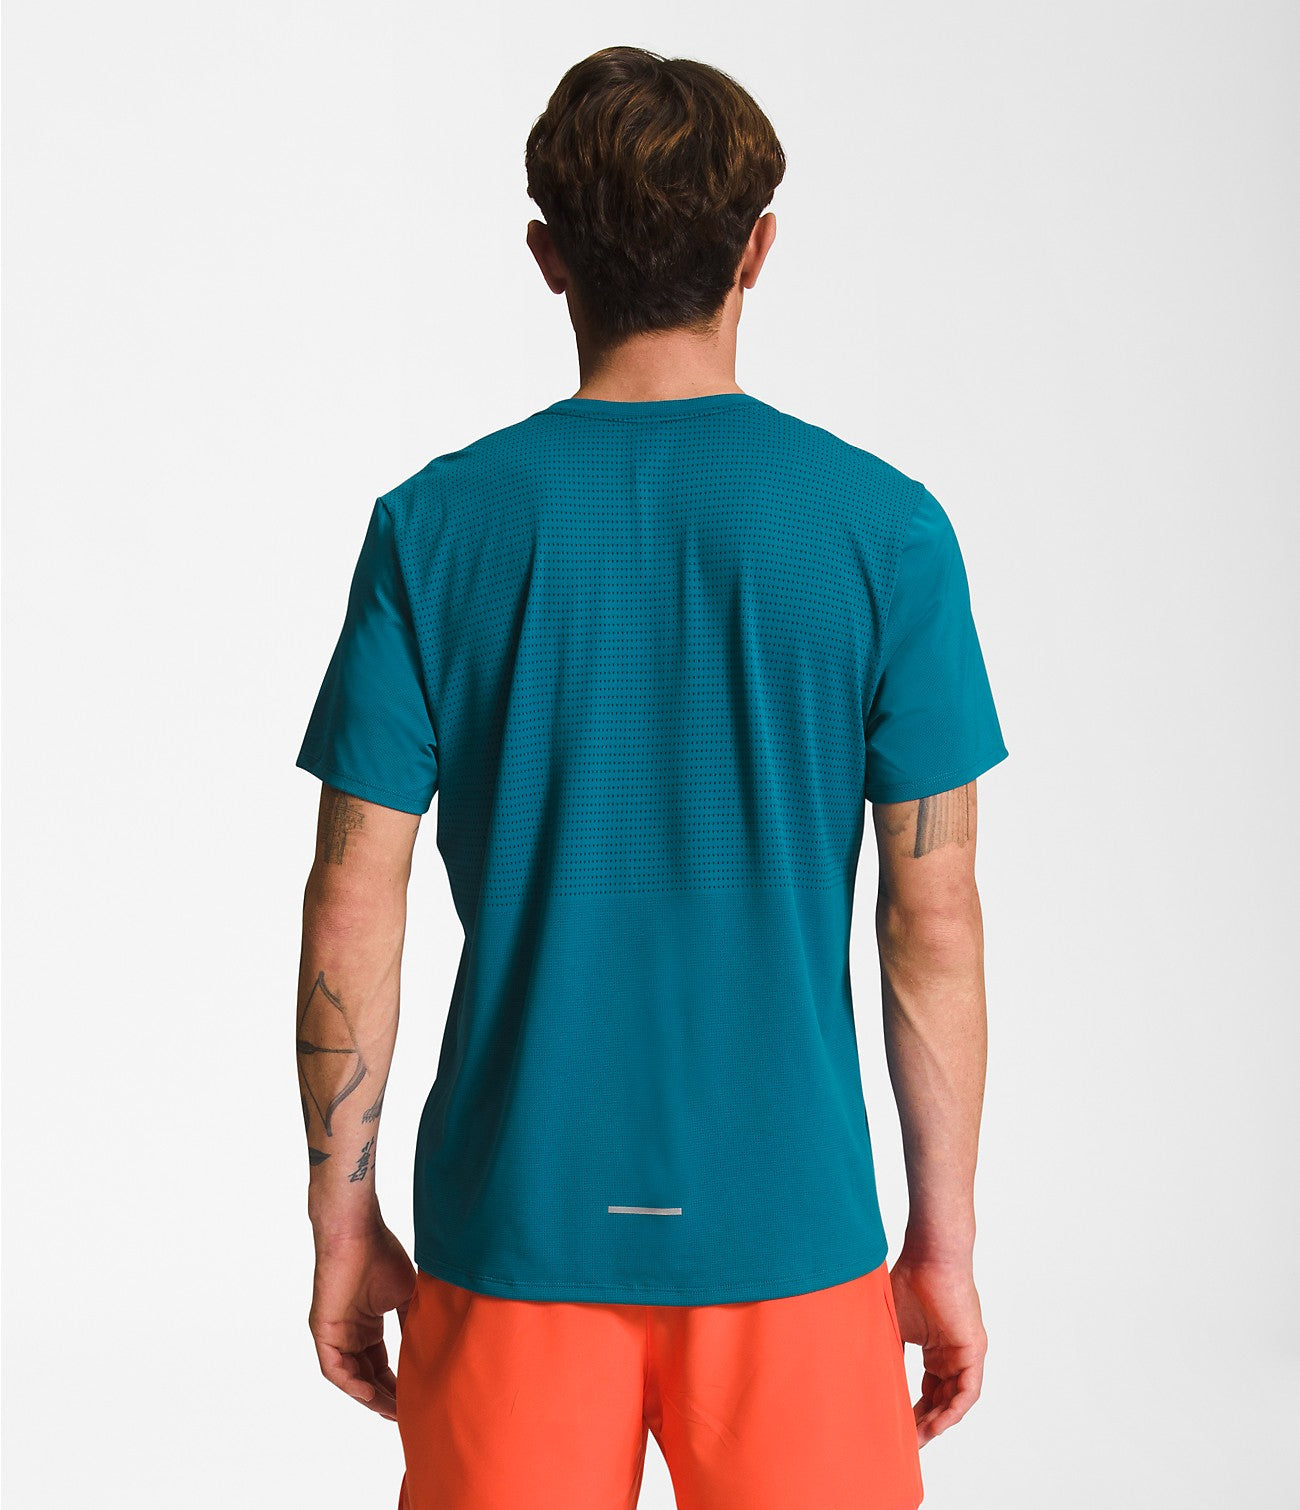 The North Face Sunriser Short Sleeve T-Shirt